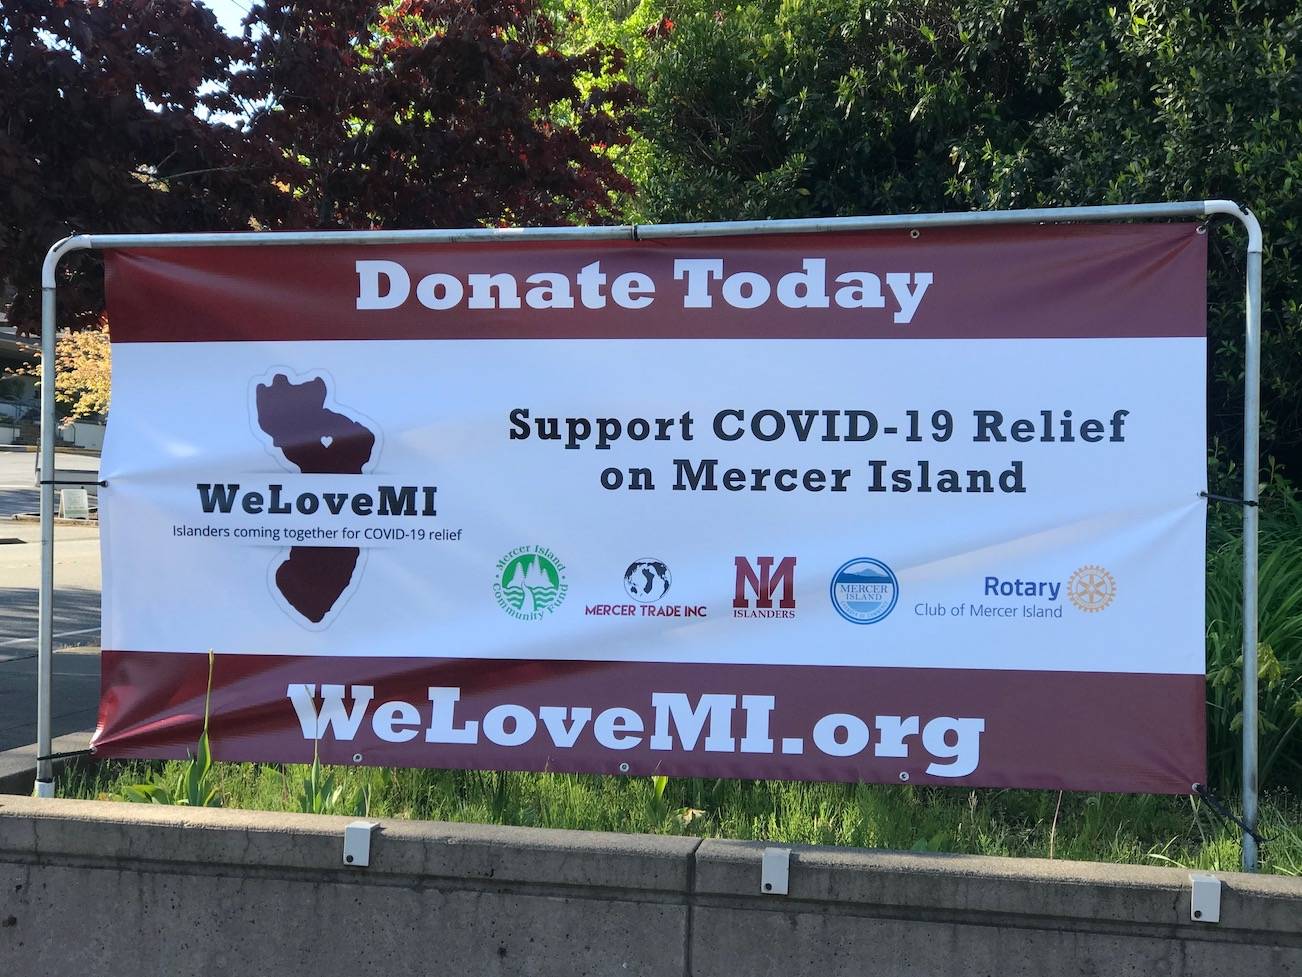 WeLoveMI.org advertisement. Photo courtesy Mercer Island Rotary Club